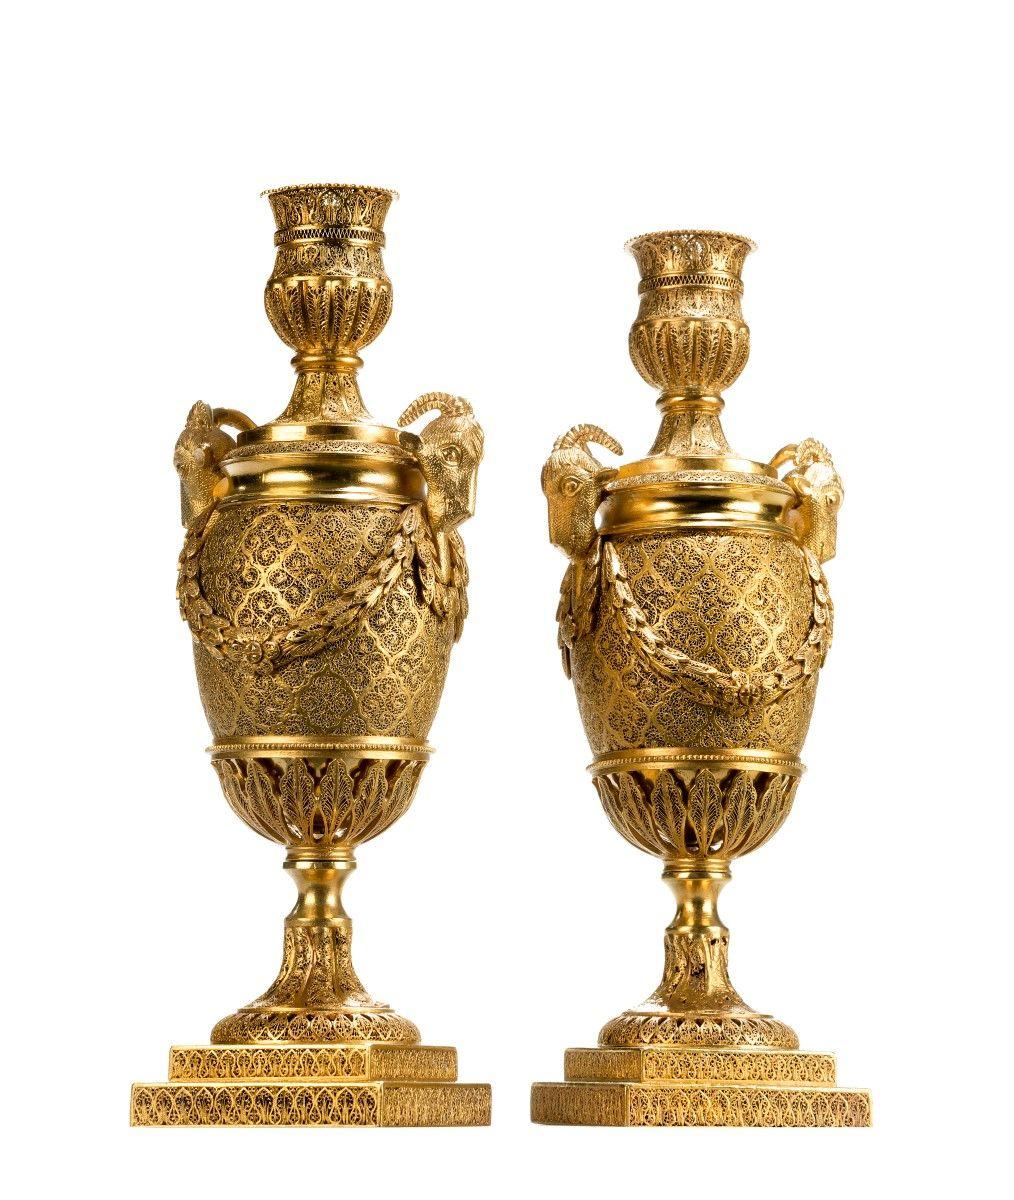 Pair of 18th century gilt Goats Head vases. Http://www.christies.com/en/lot/lot-5805952